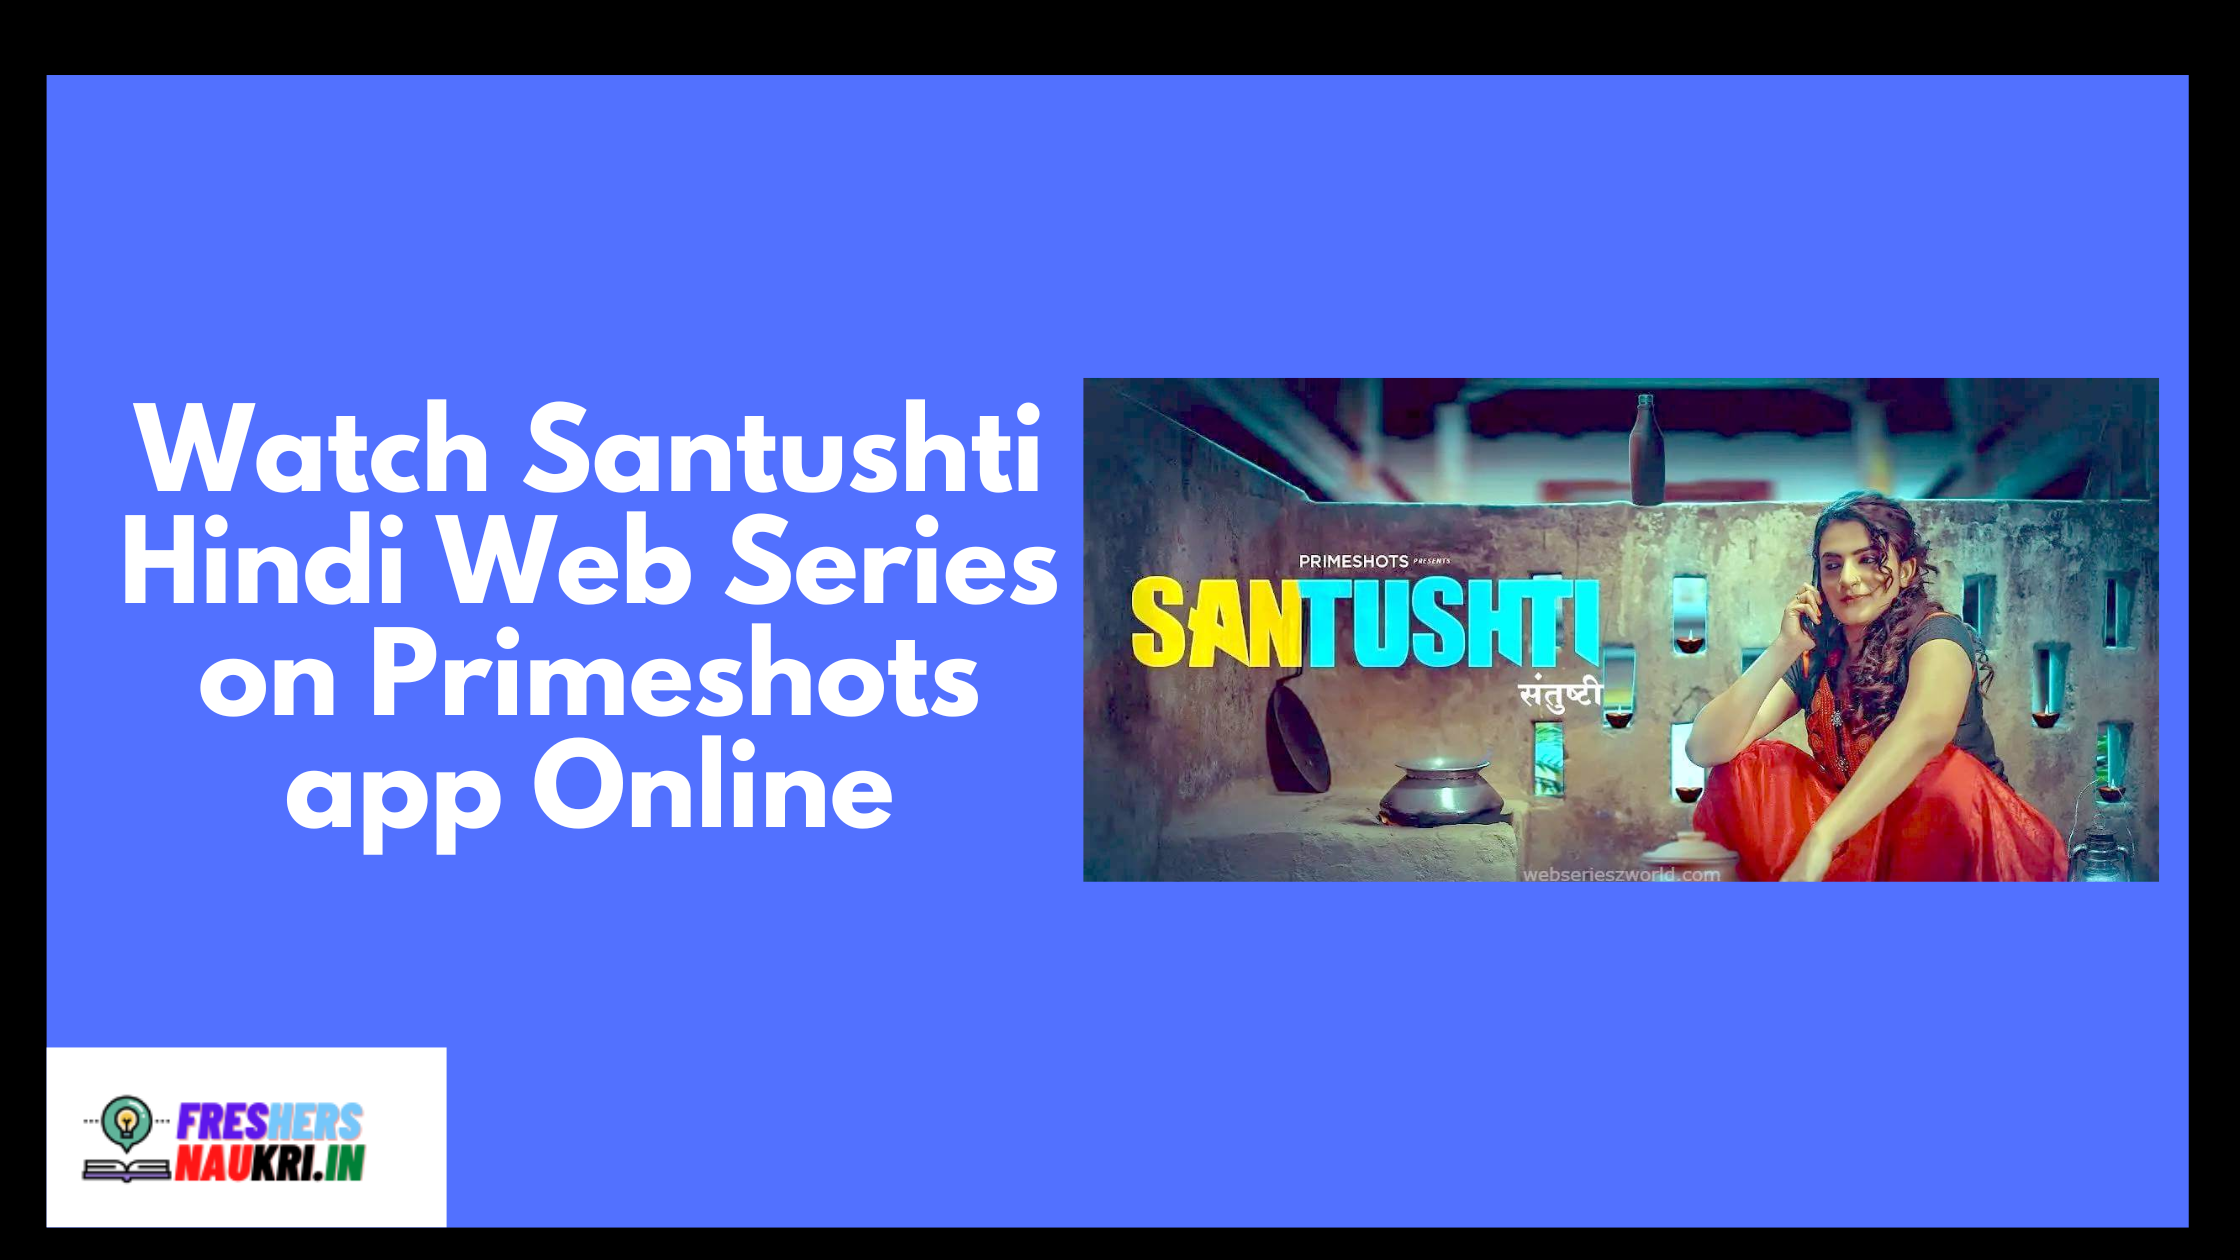 Watch Santushti Hindi Web Series on Primeshots app Online